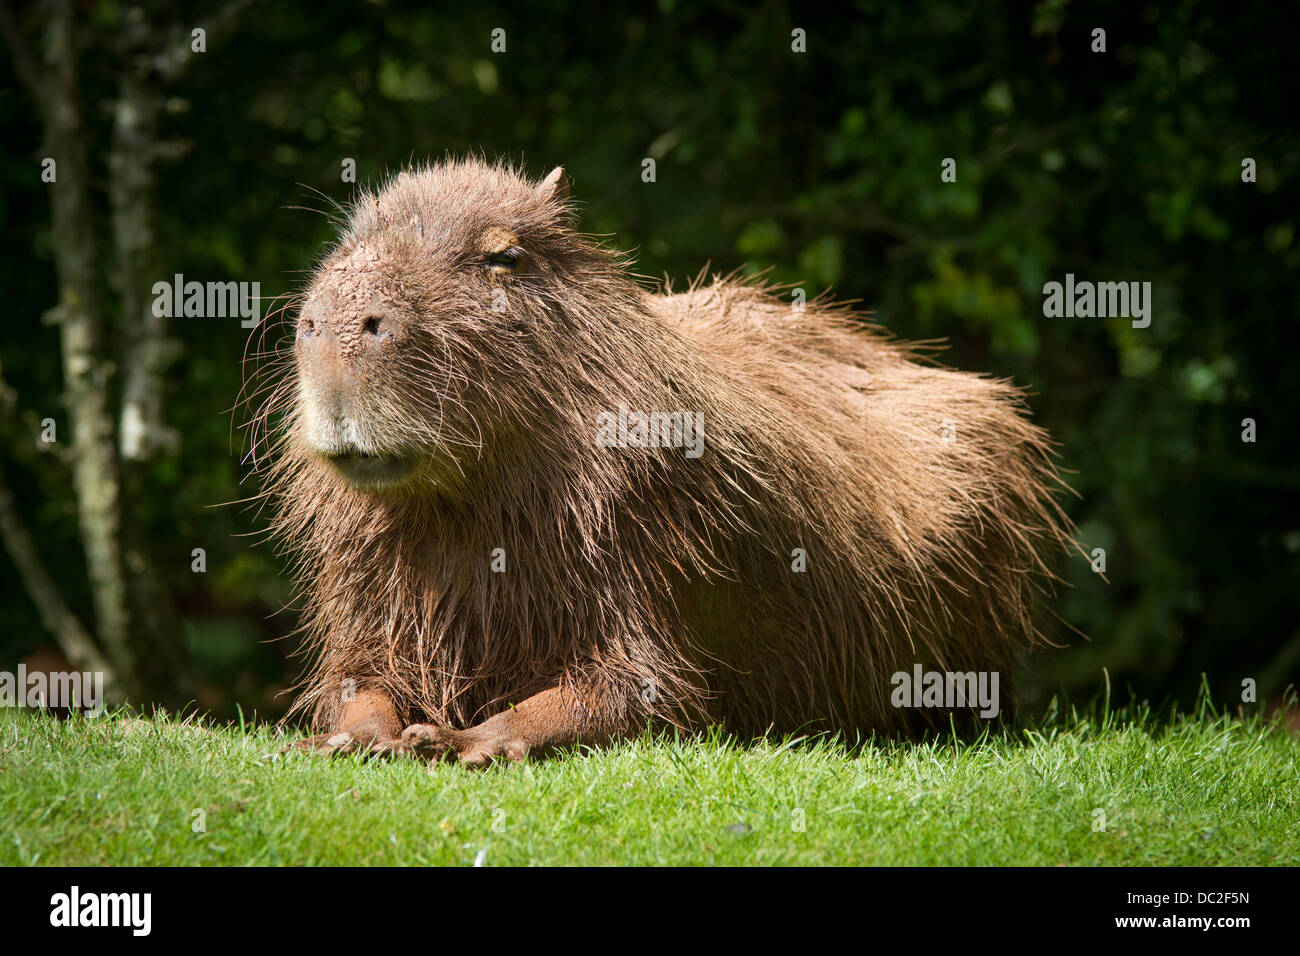 A South American Capybara (Hydrochaeris hydrochaeris) the worlds largest living rodent, sat down on grass. Stock Photo